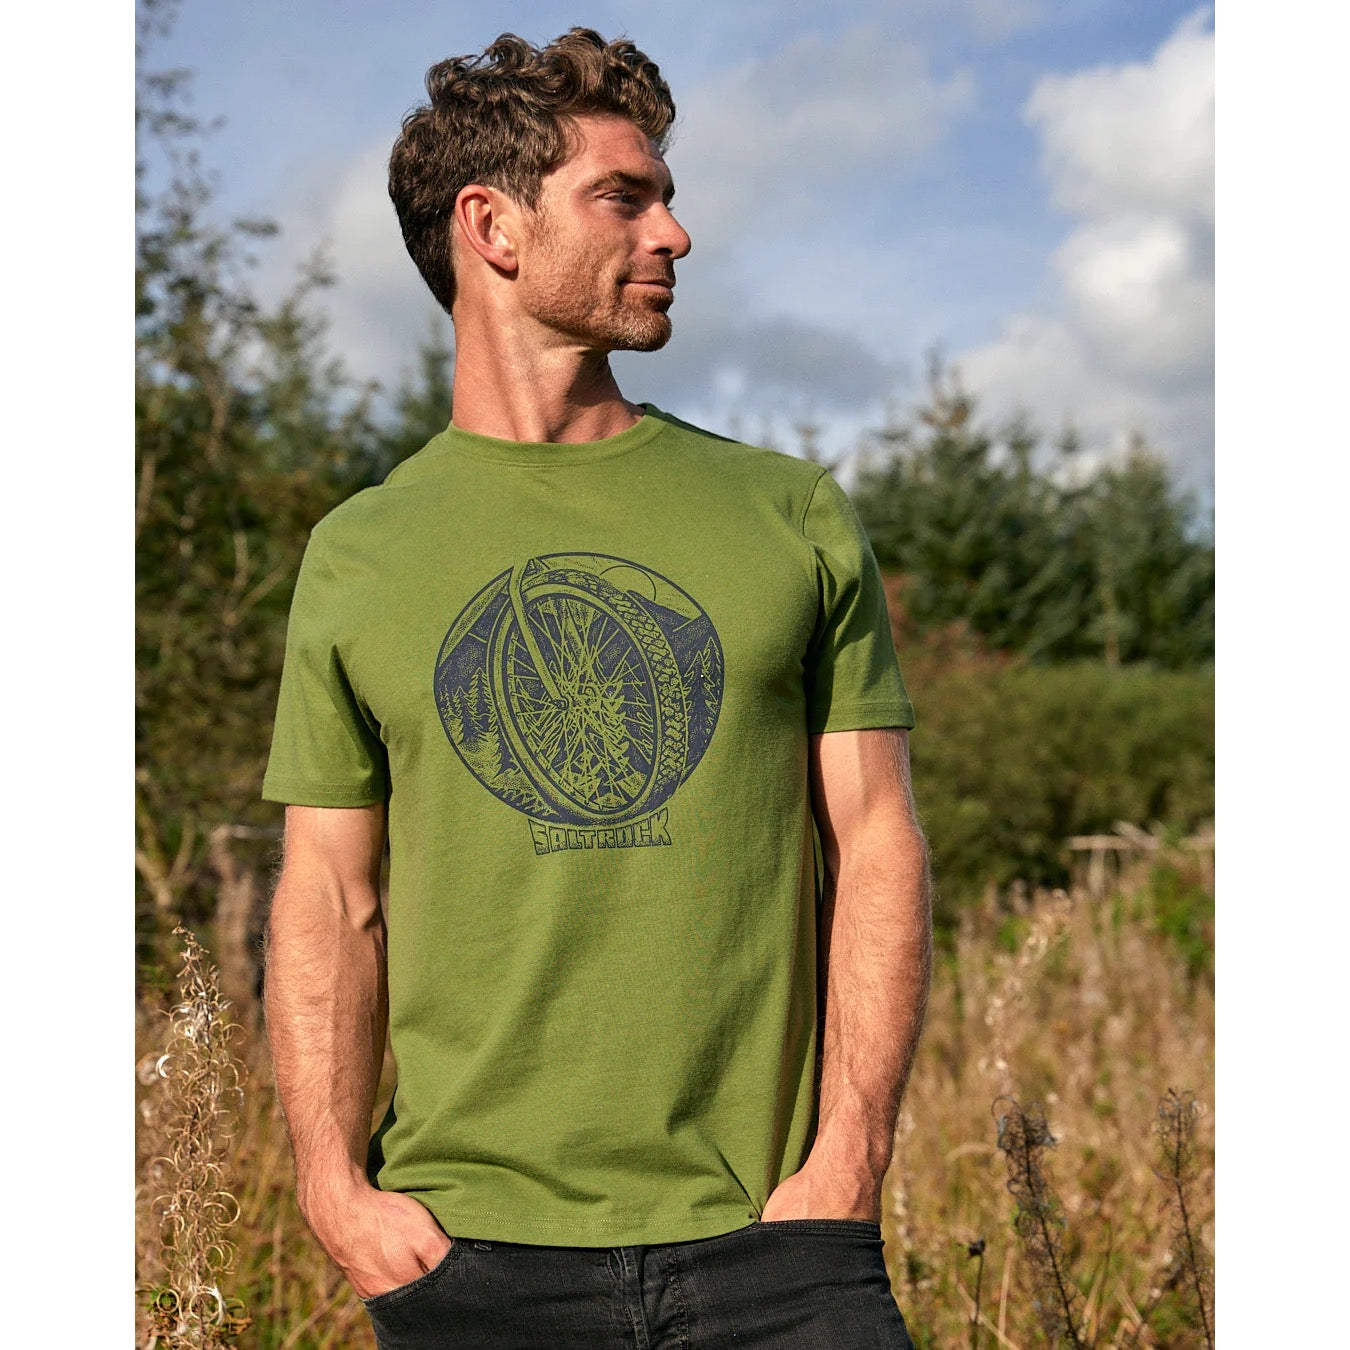 Saltrock Mens Trail Bike T-Shirt Tsf12302032 Clothing SMALL ADULT / Green,MEDIUM ADULT / Green,LARGE ADULT / Green,XL ADULT / Green